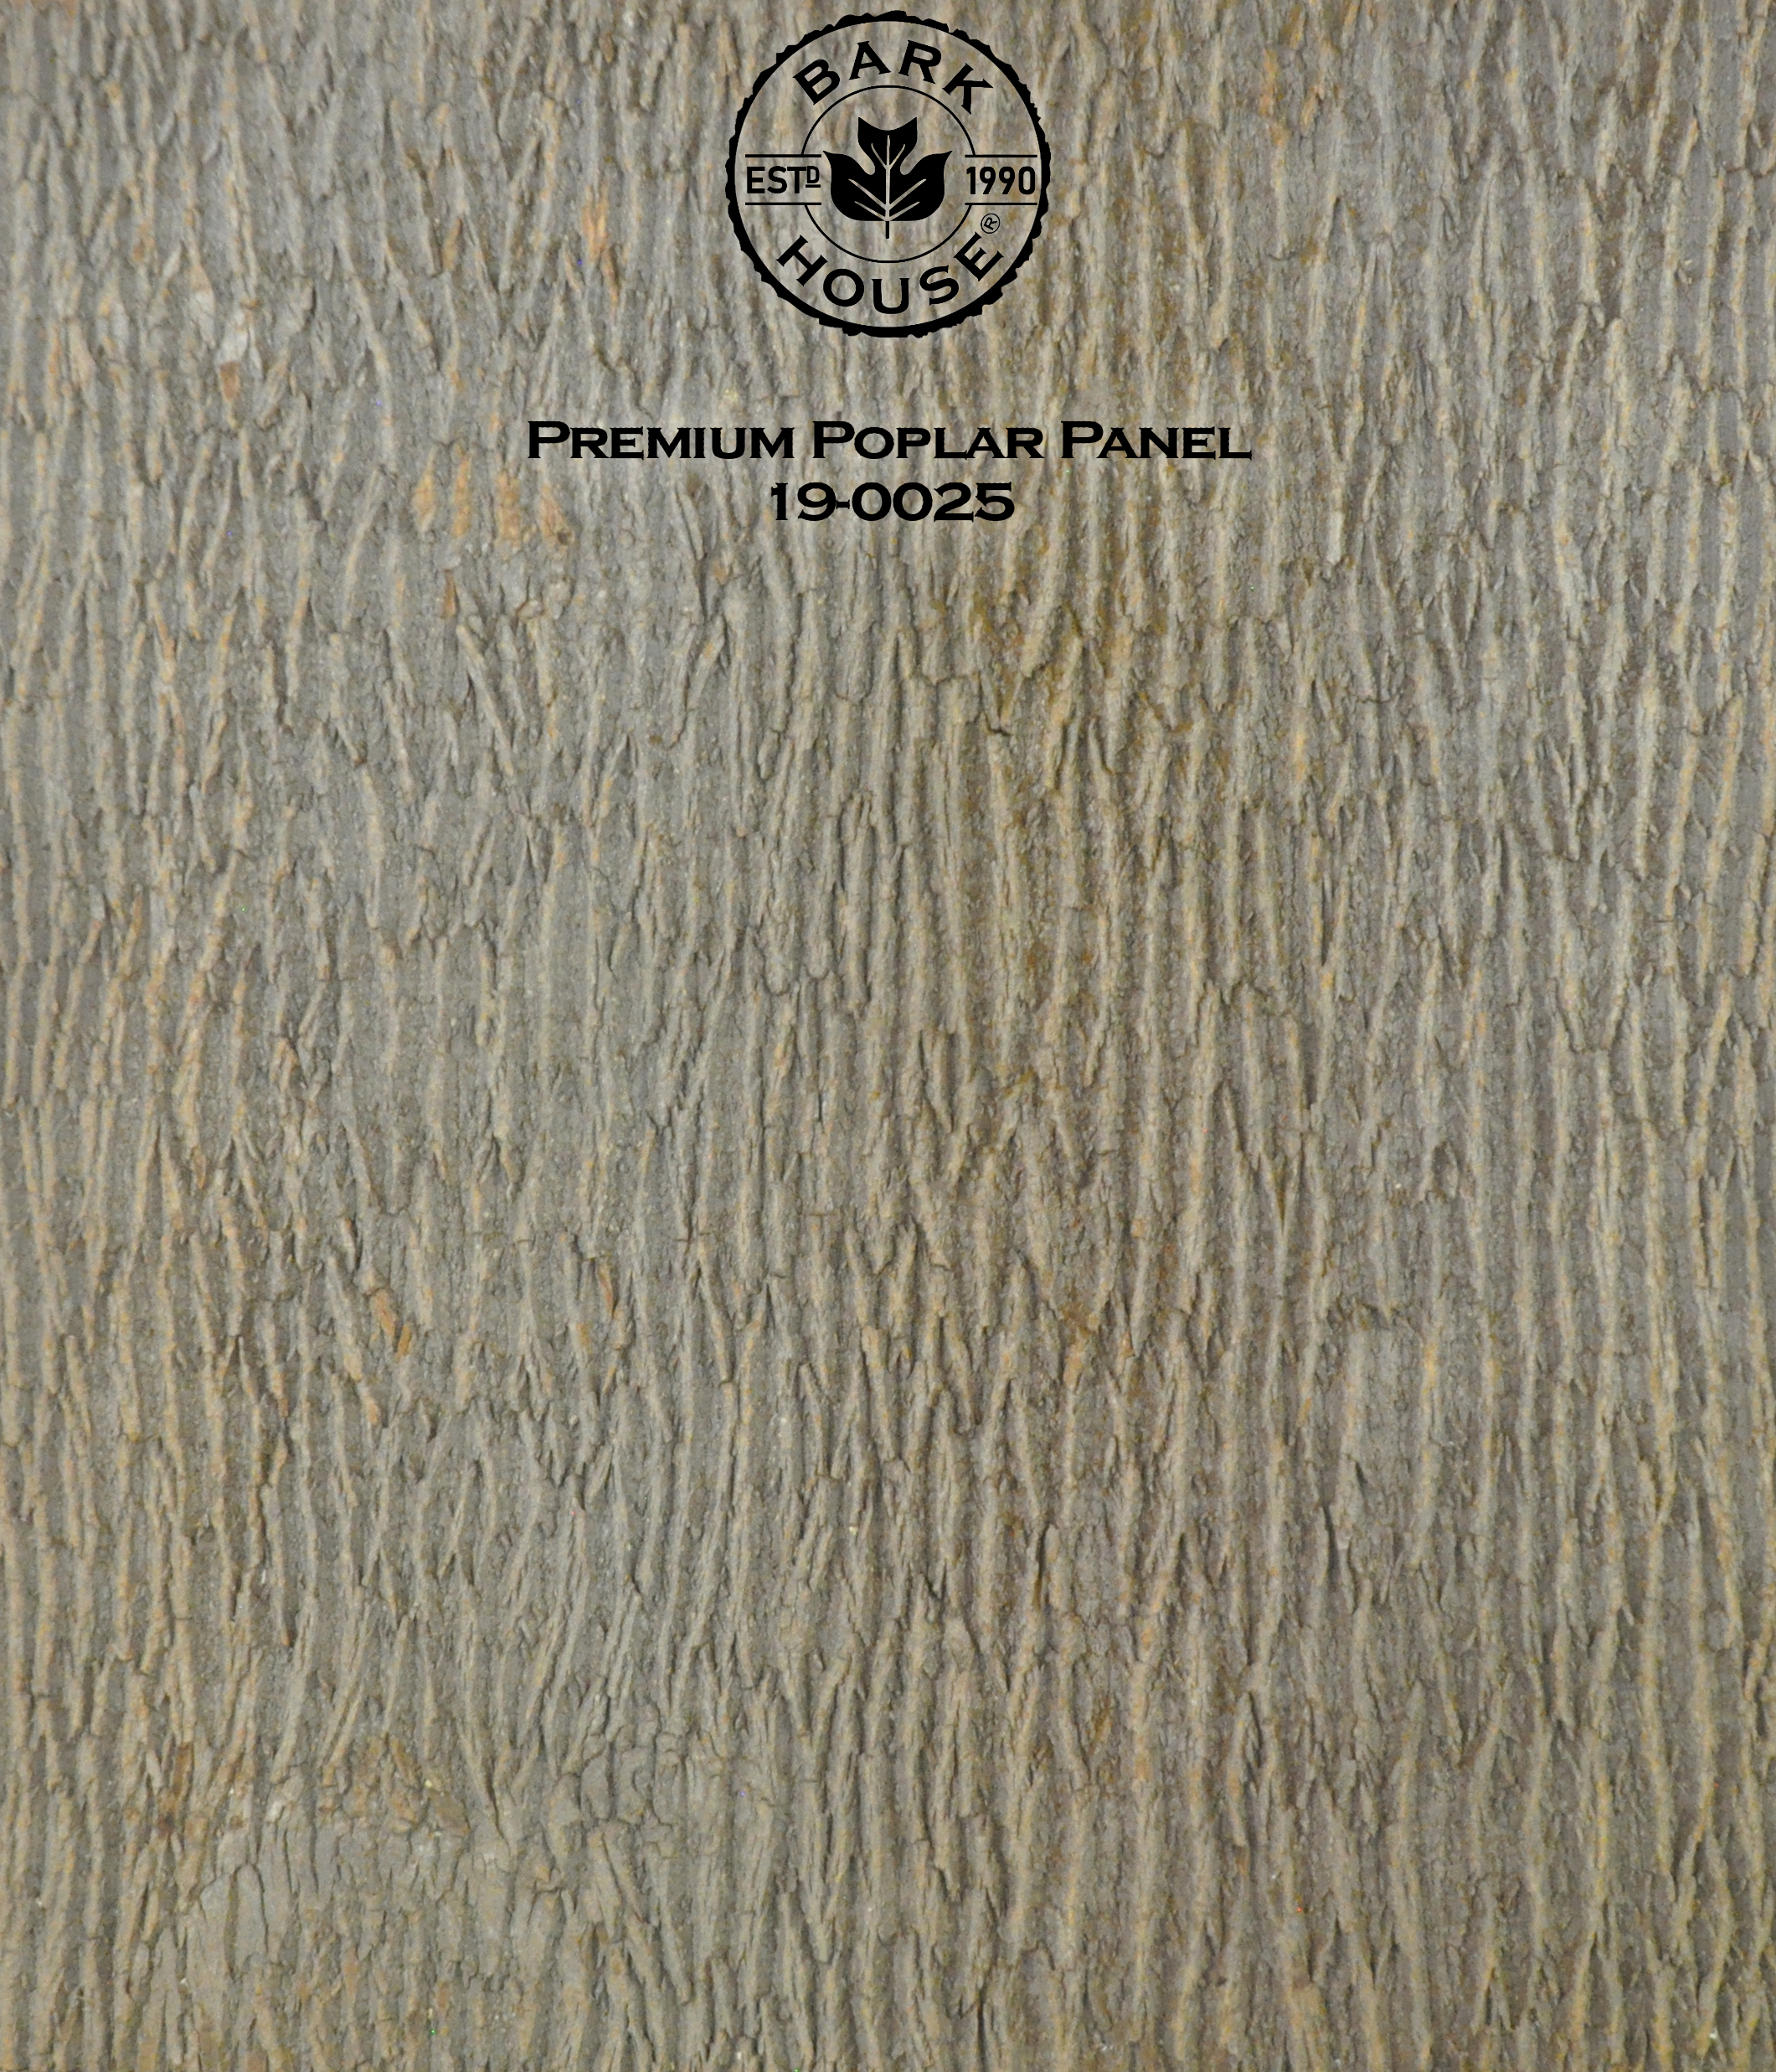 Bark House poplar bark panel SKU POPP-PRE-19-0025